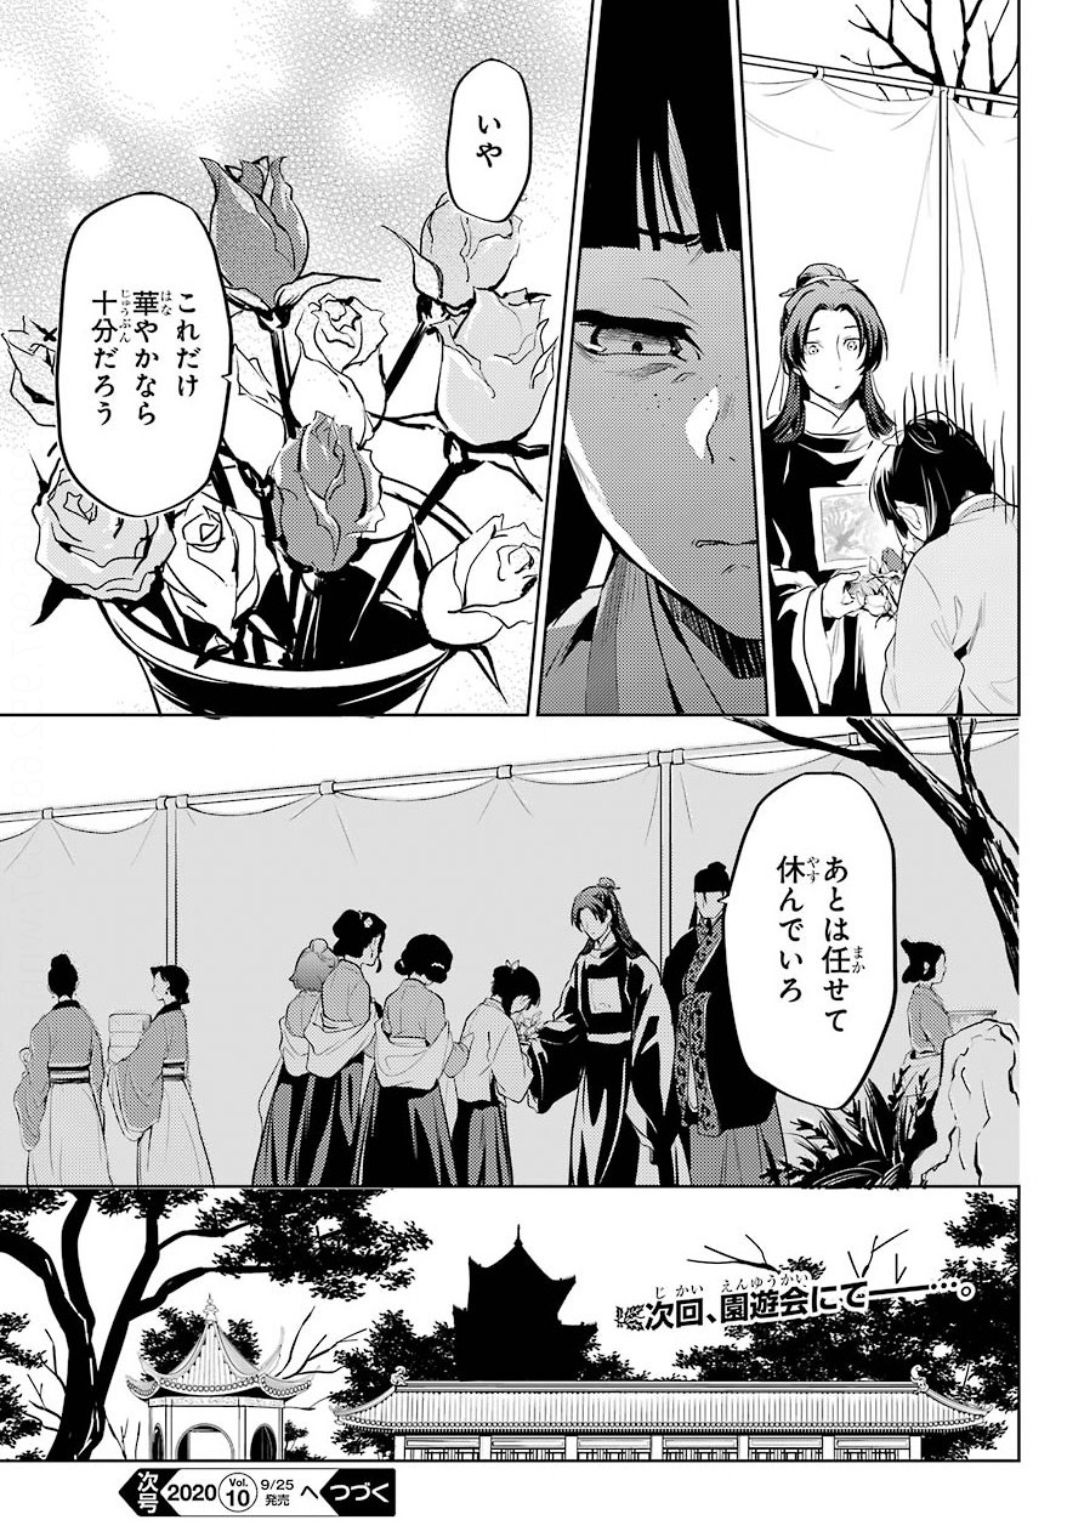 Kusuriya no Hitorigoto - Chapter 36.1 - Page 17